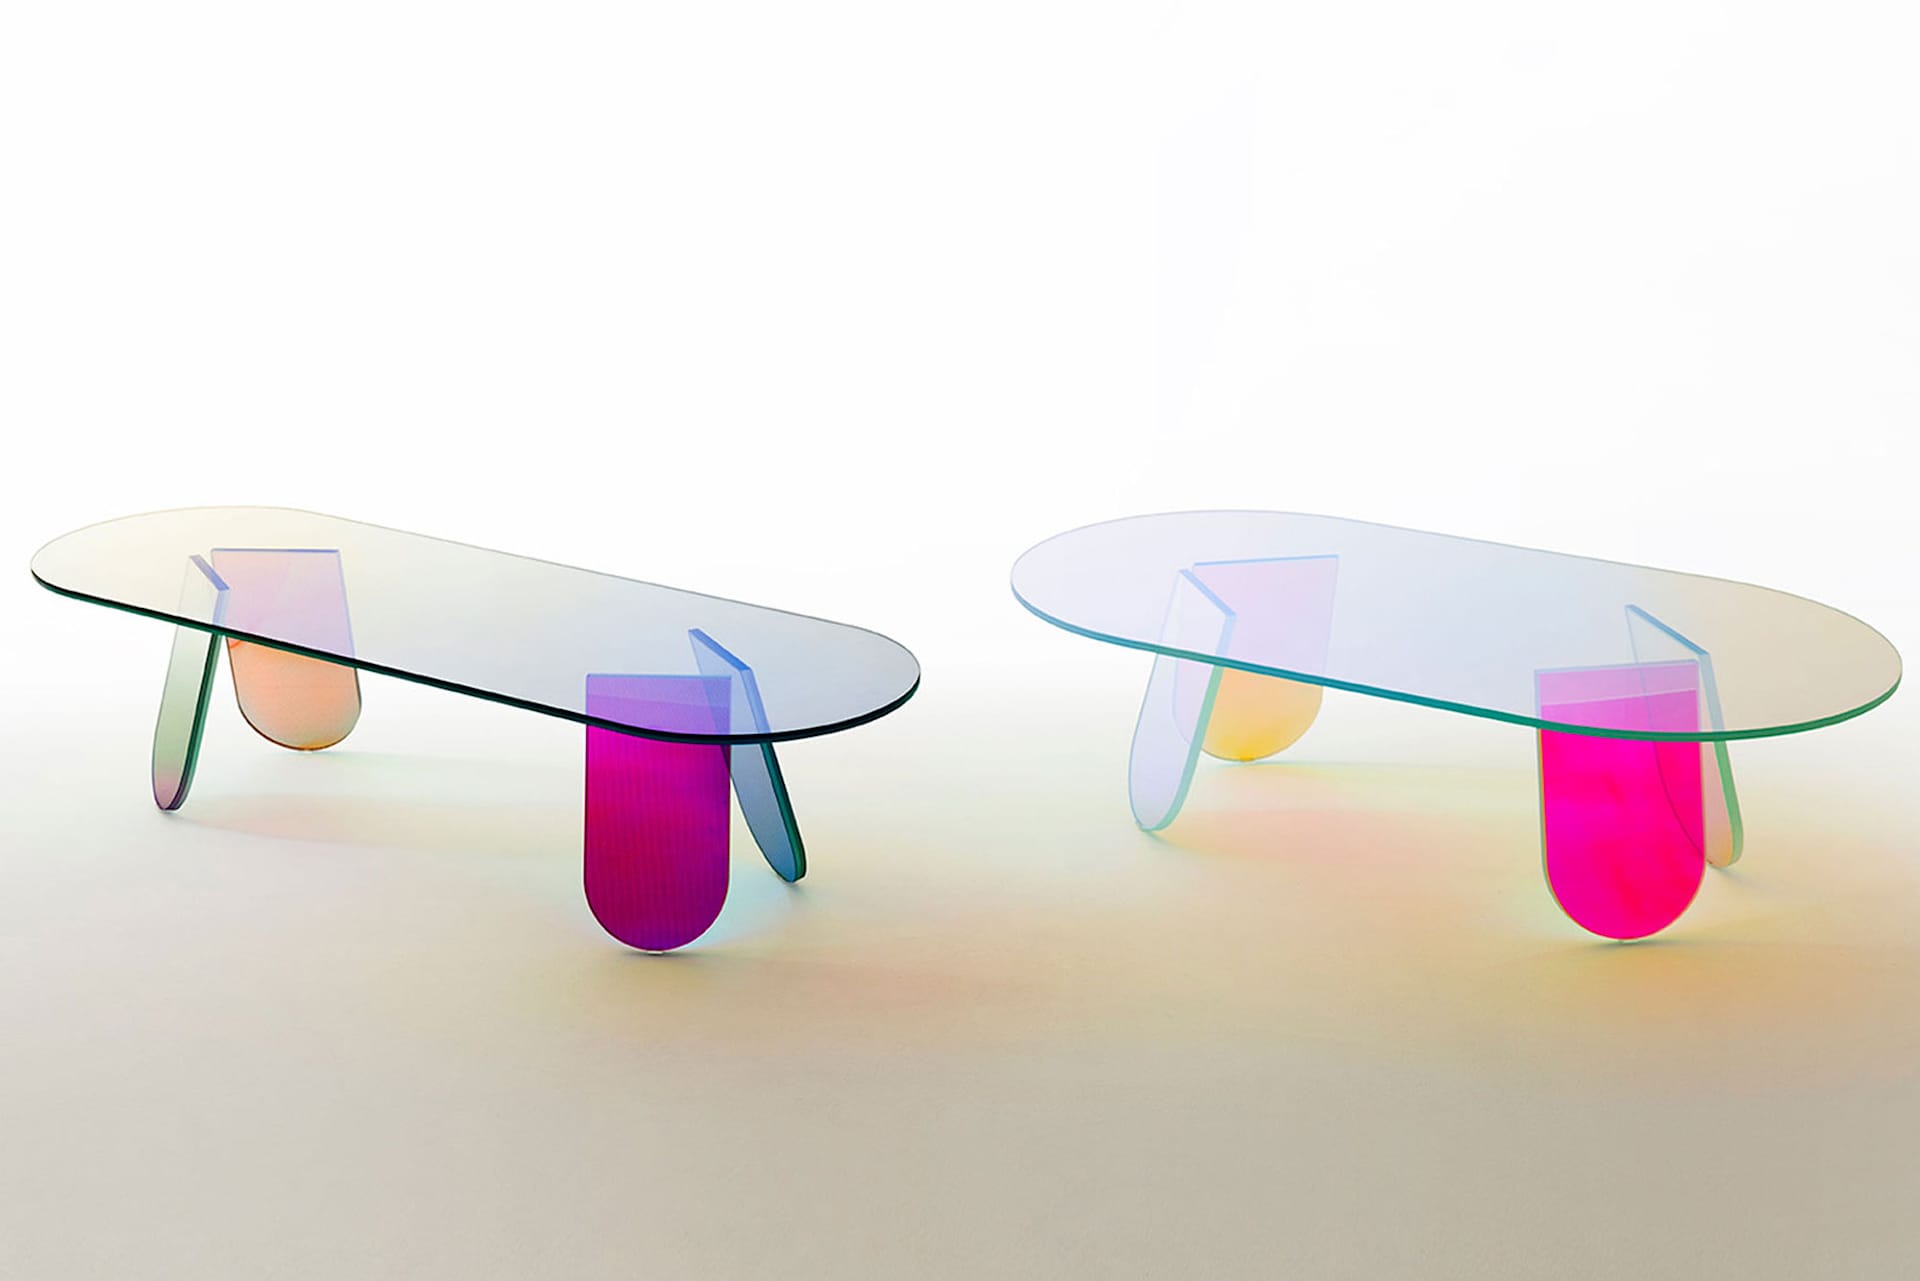 SHI03 Shimmer Low Table - Glas Italia - Patricia Urquiola - NO GA